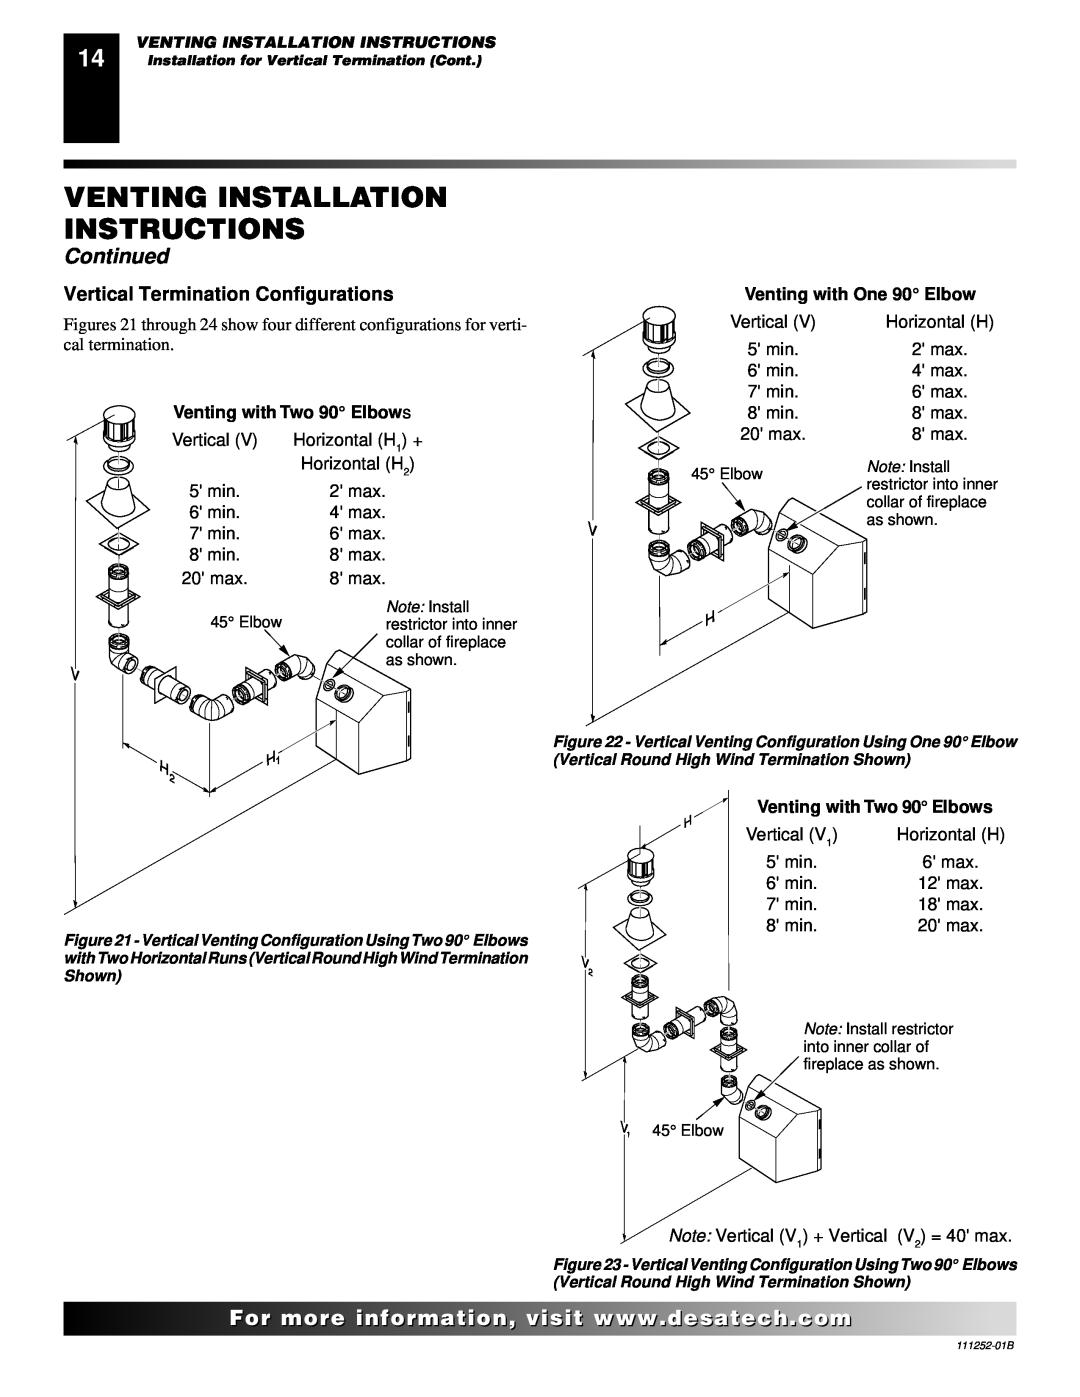 Desa (V)V36PA(1) installation manual Vertical Termination Configurations, Venting Installation Instructions, Continued 